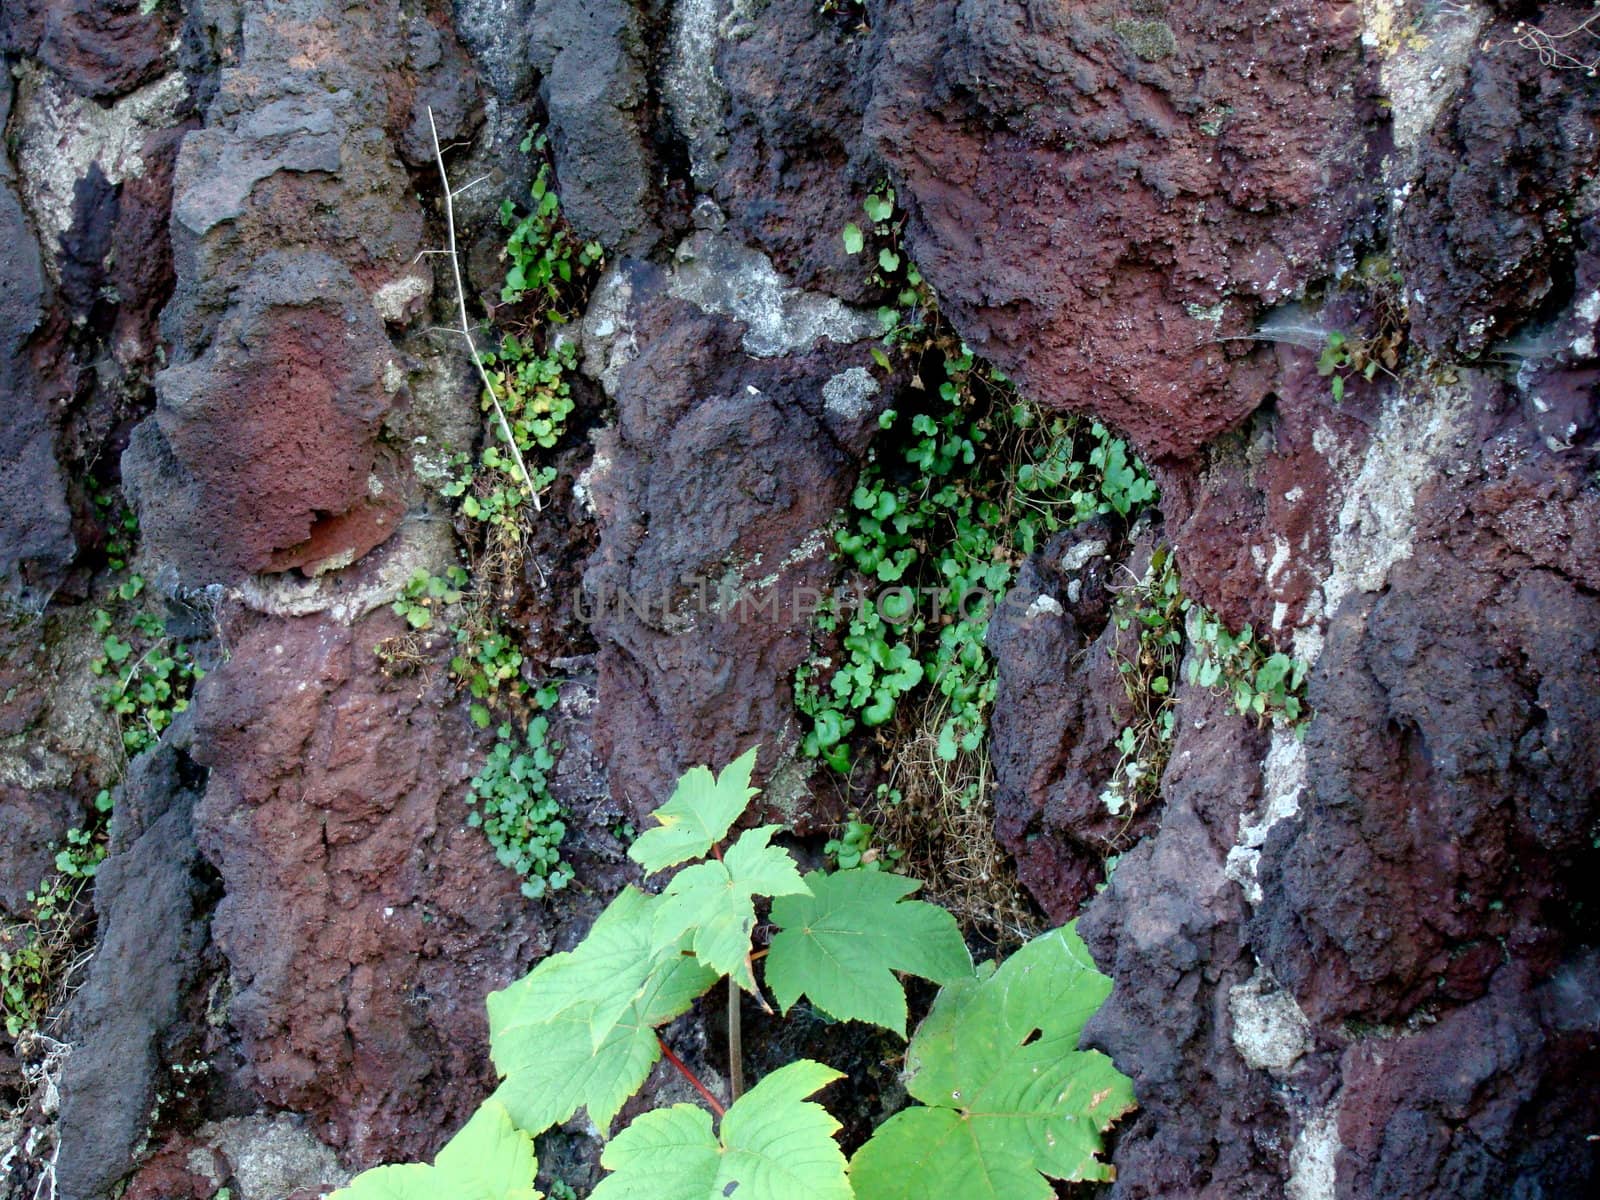 braun rocks with plants